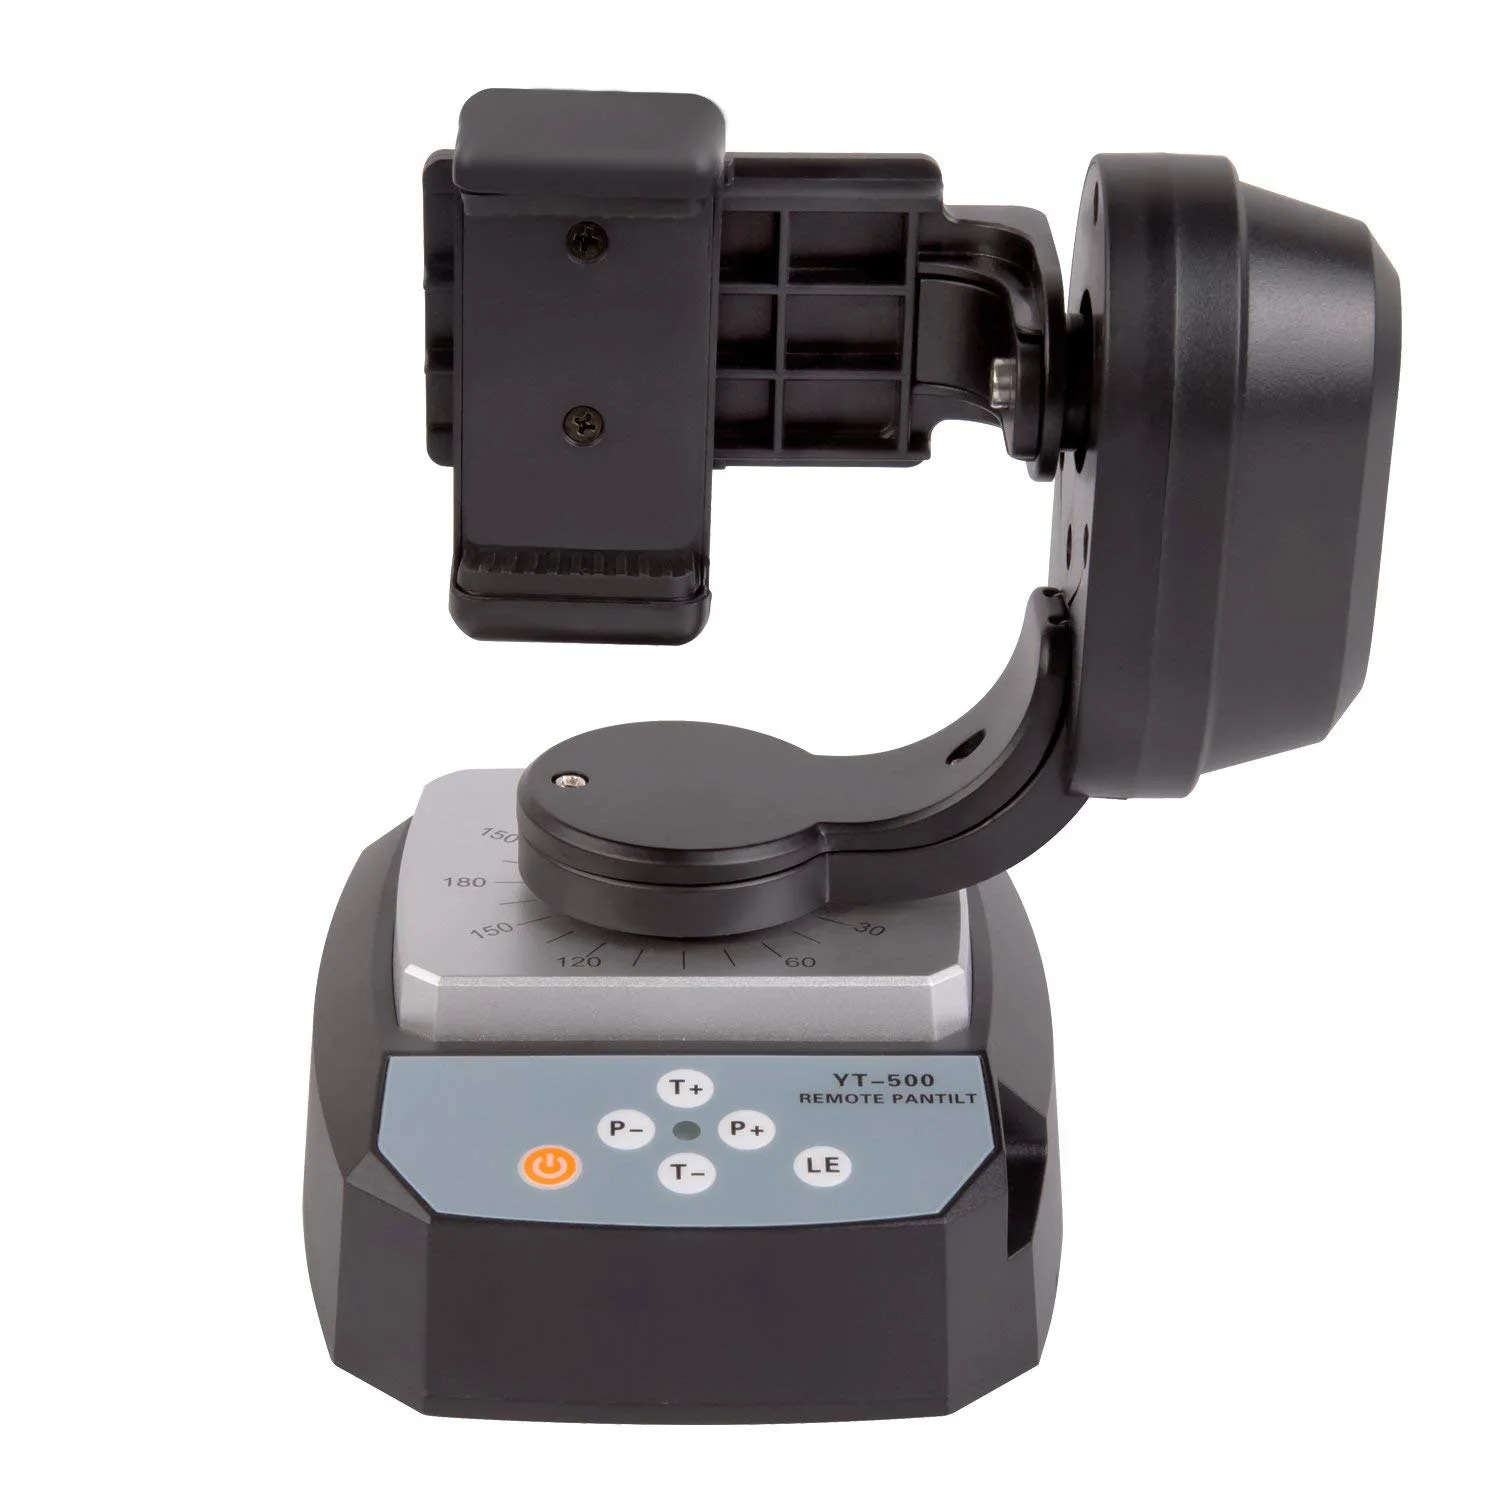 Маха ZIFON YT-500 автоматический дистанционное управление Управление функции панорамирования, наклона и моторизованный вращающийся Штатив для видеосъемки Для iPhone 7/7 Plus/6/6 Plus смартфон - Цвет: Black